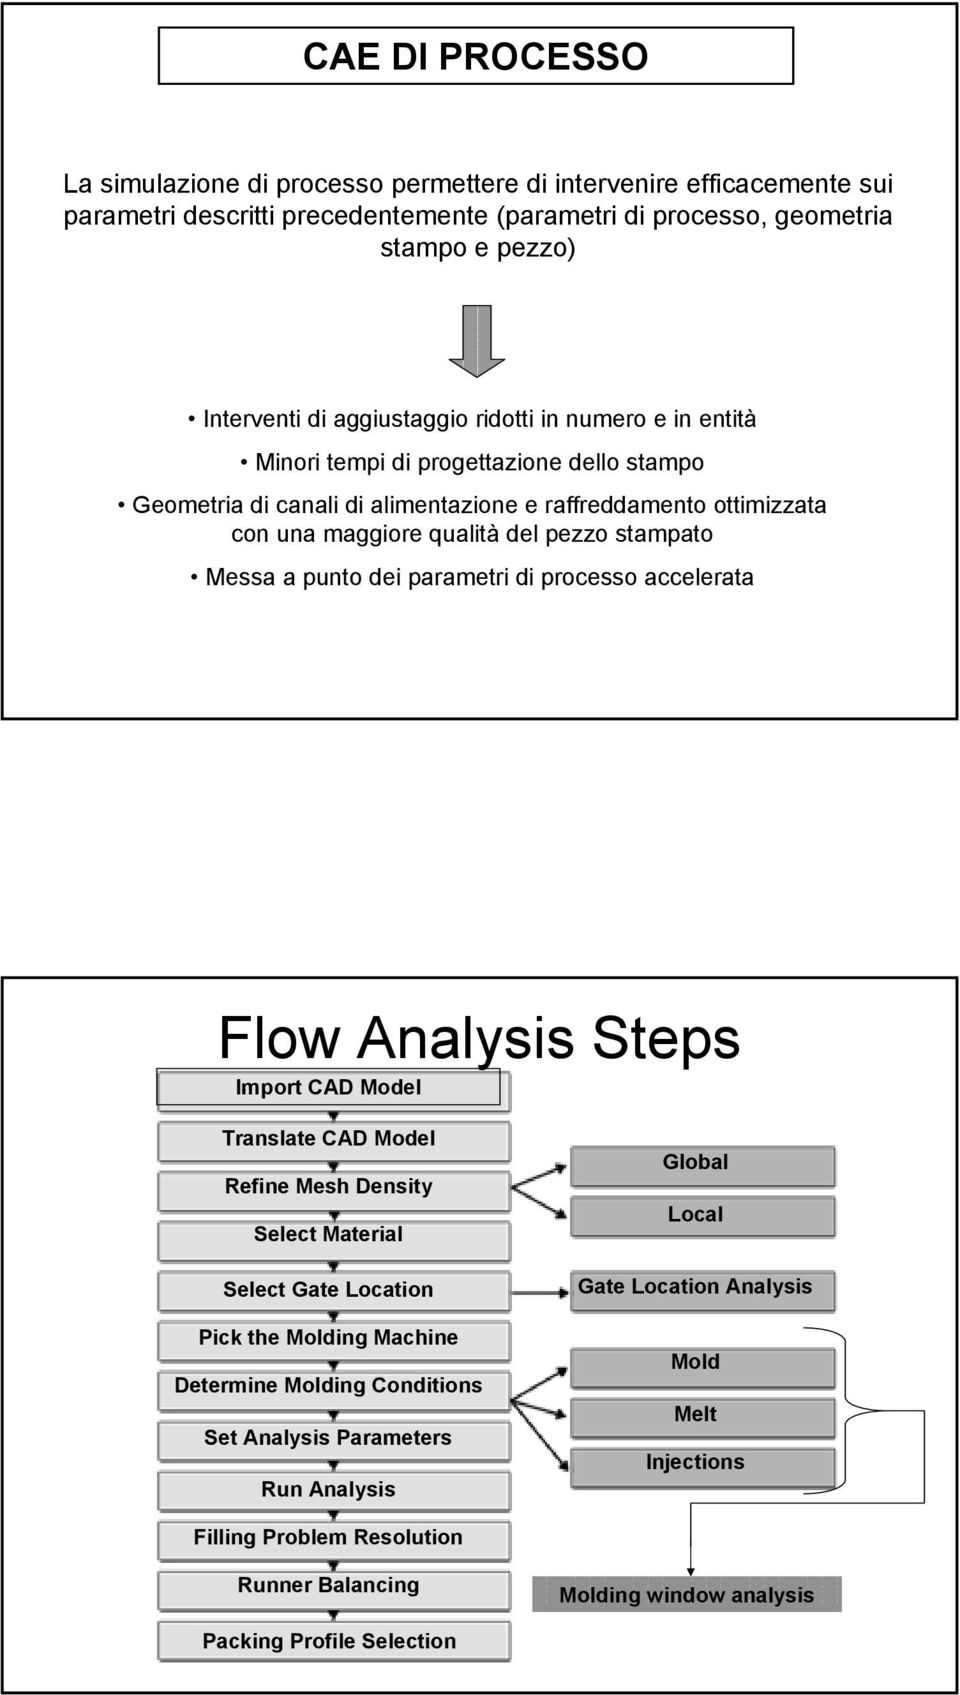 Messa a punto dei parametri di processo accelerata Flow Analysis Steps Import CAD Model Translate CAD Model Refine Mesh Density Select Material Select Gate Location Pick the Molding Machine